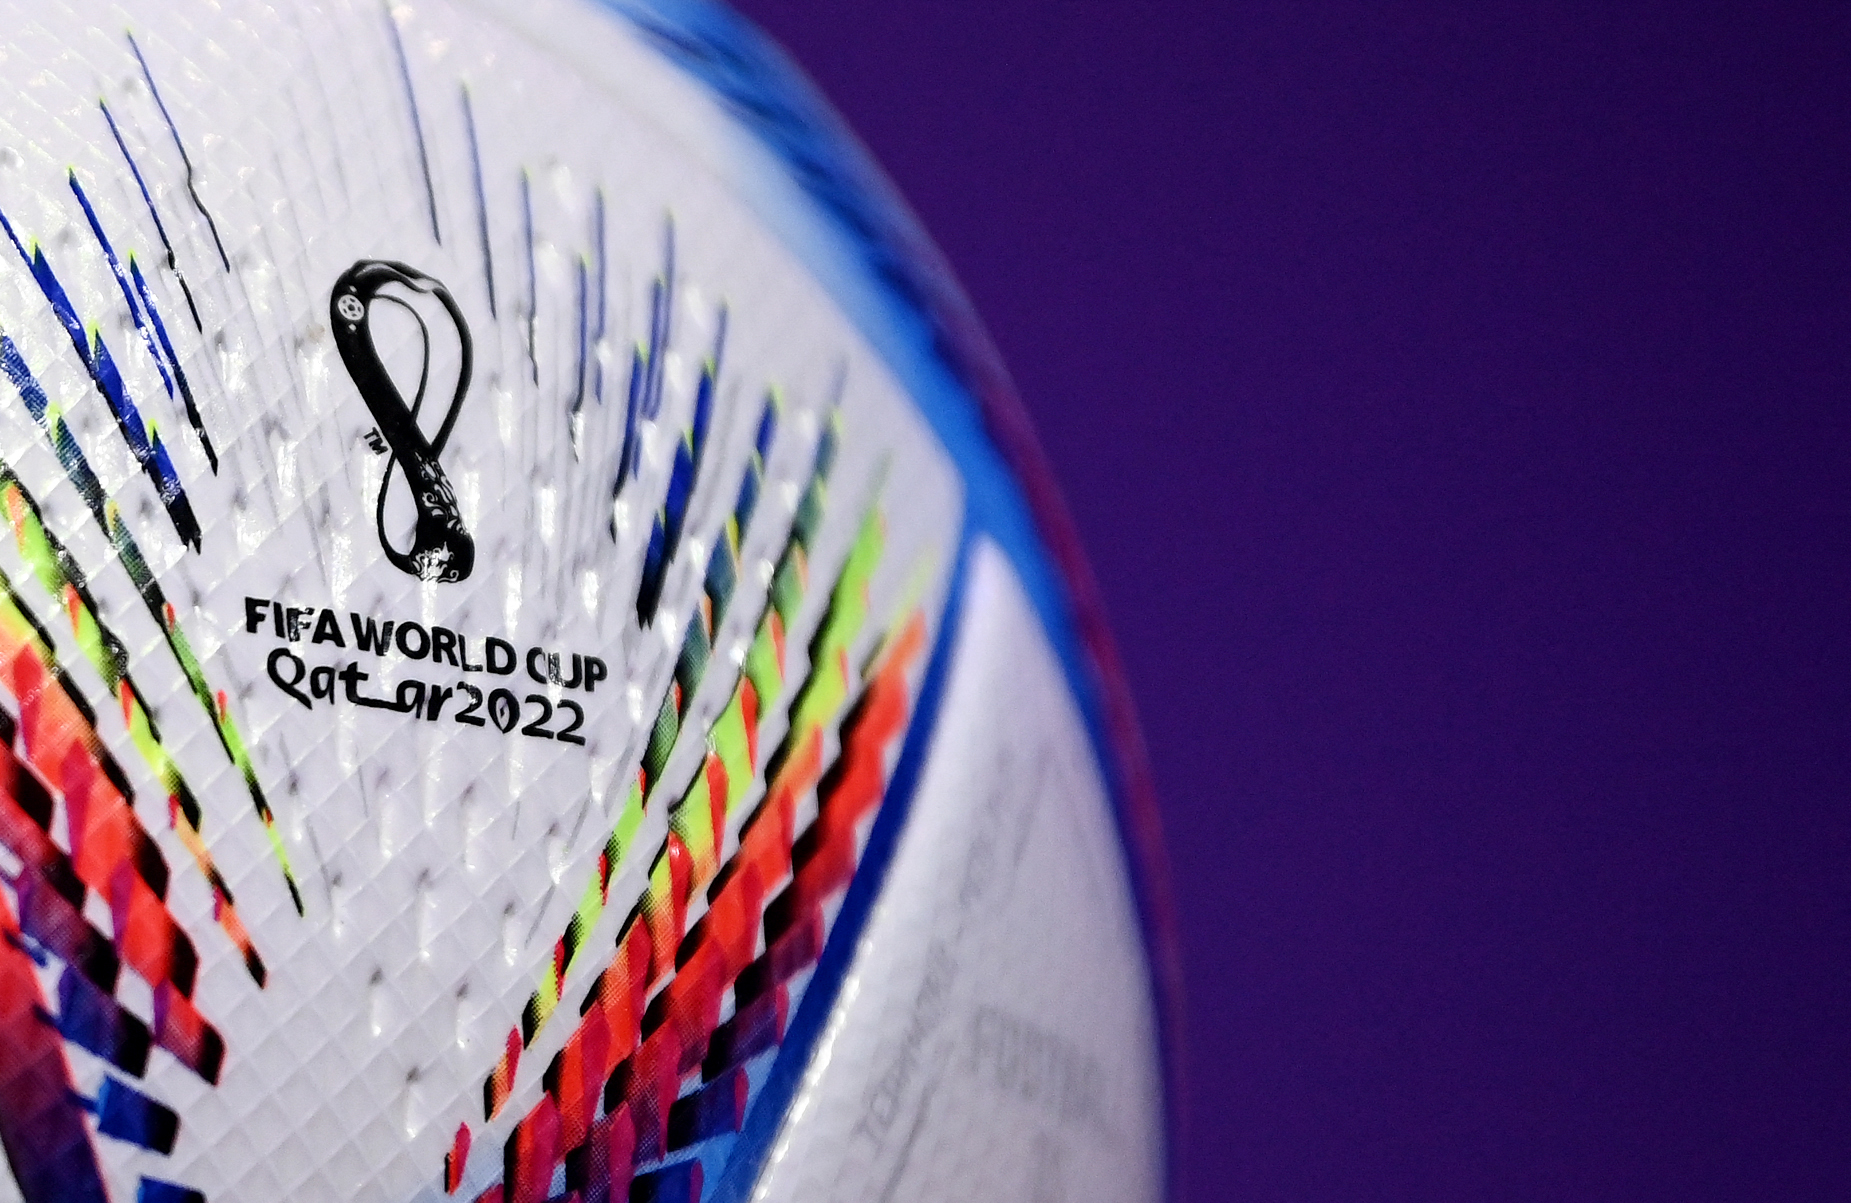 safari draw 2022 qatar